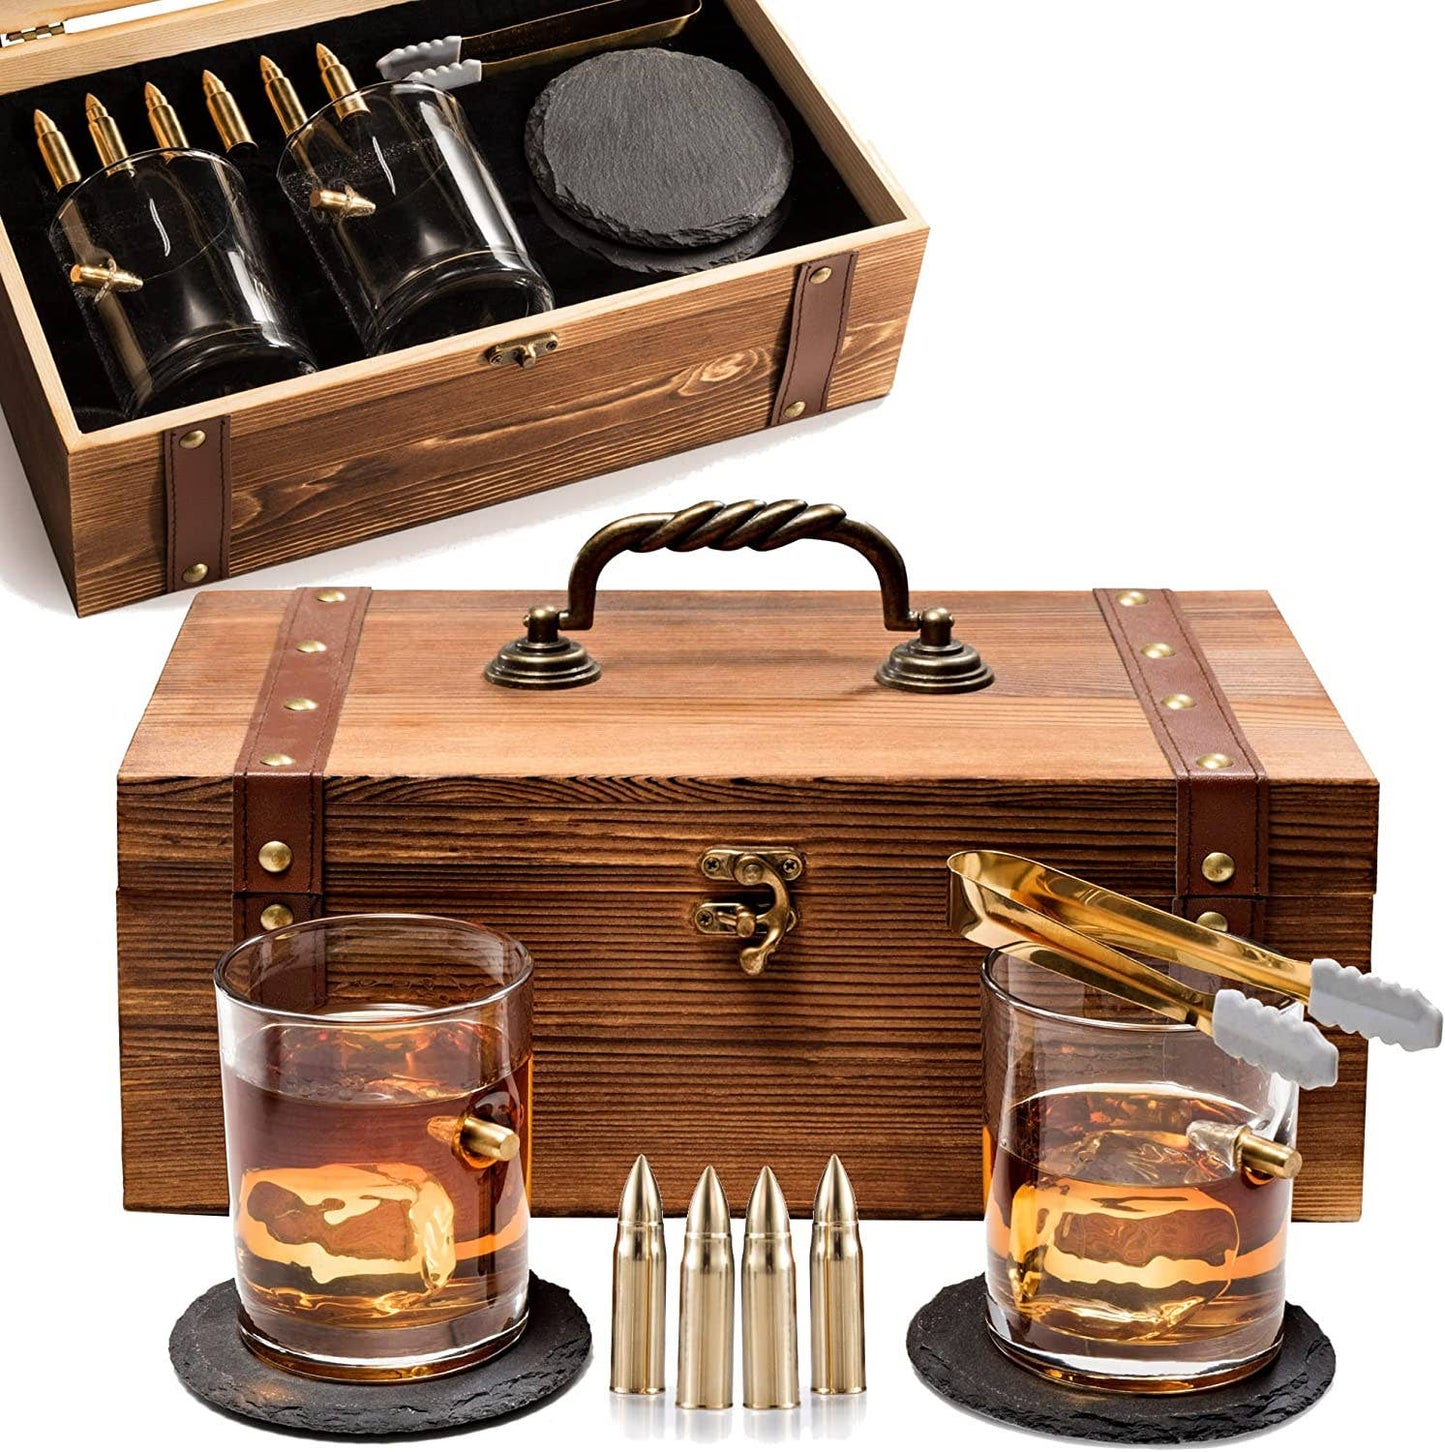 Bezrat - WhiskeyGlasses & Stones Unique 10 Piece Gift Set in Gift Box